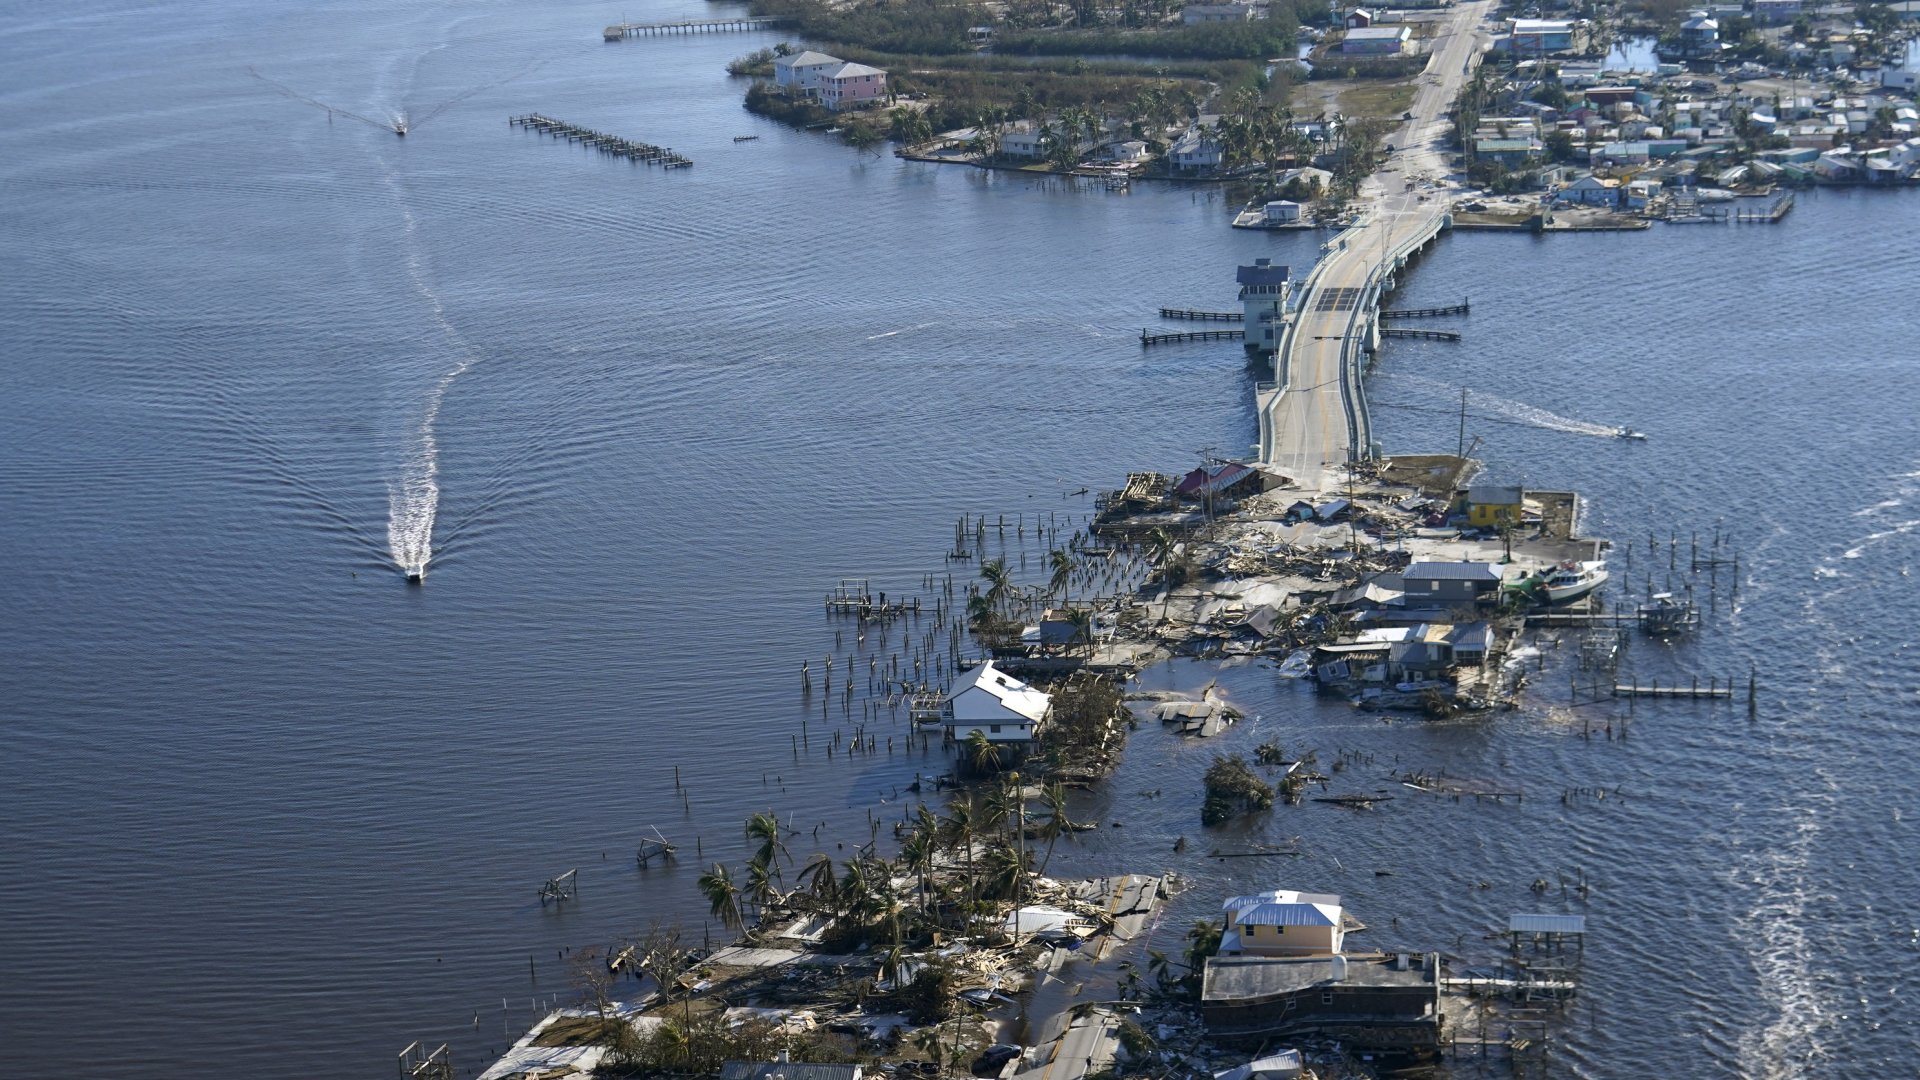 Hurricane damage in US: Path of devastation, at least 50 dead